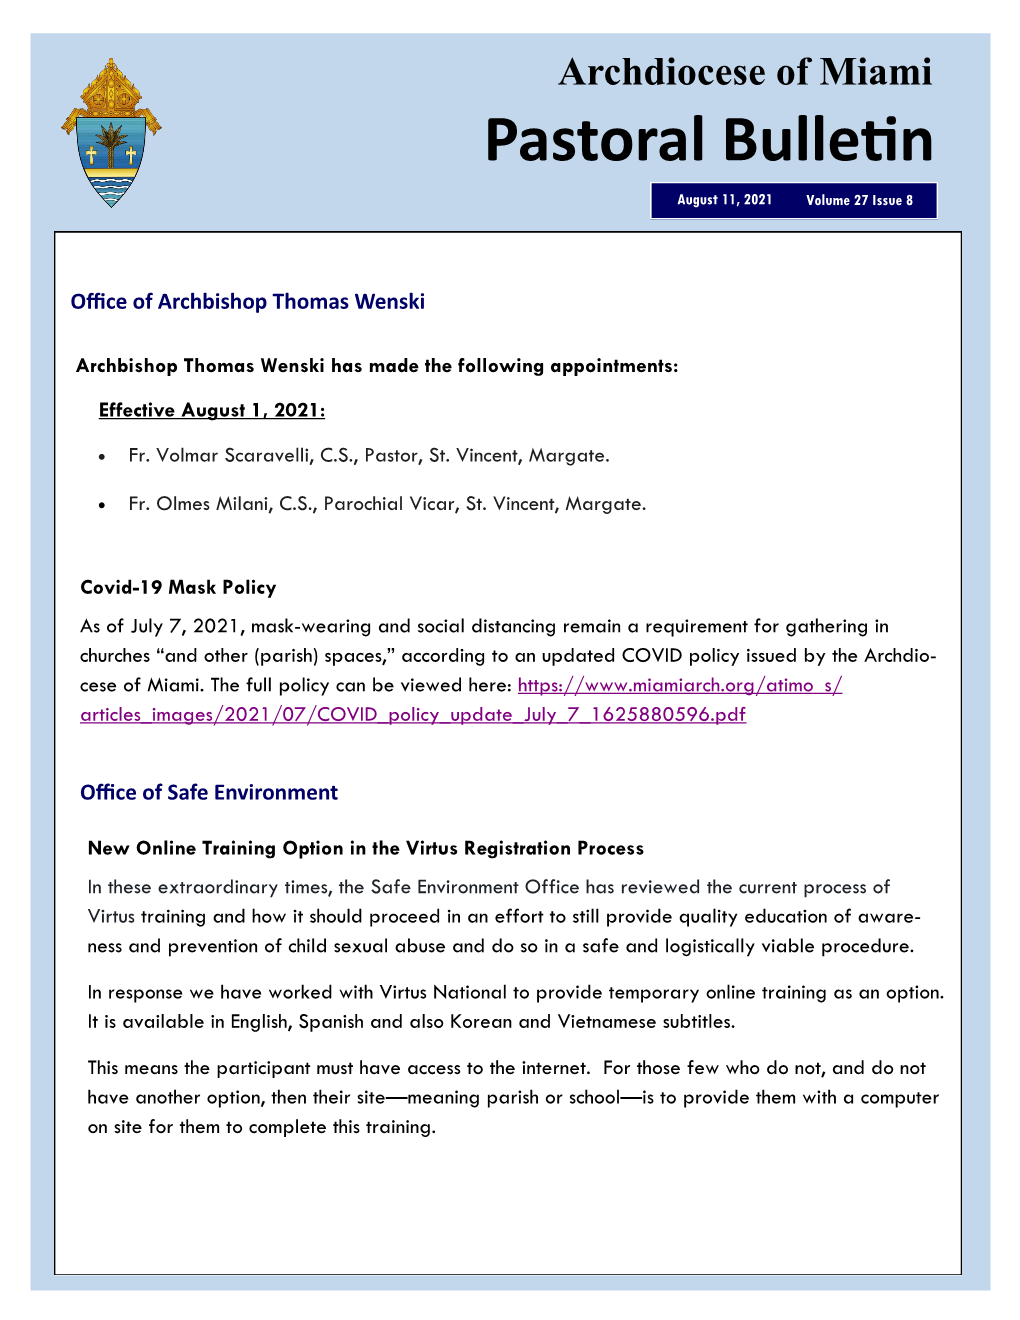 Pastoral Bulletin August 11, 2021